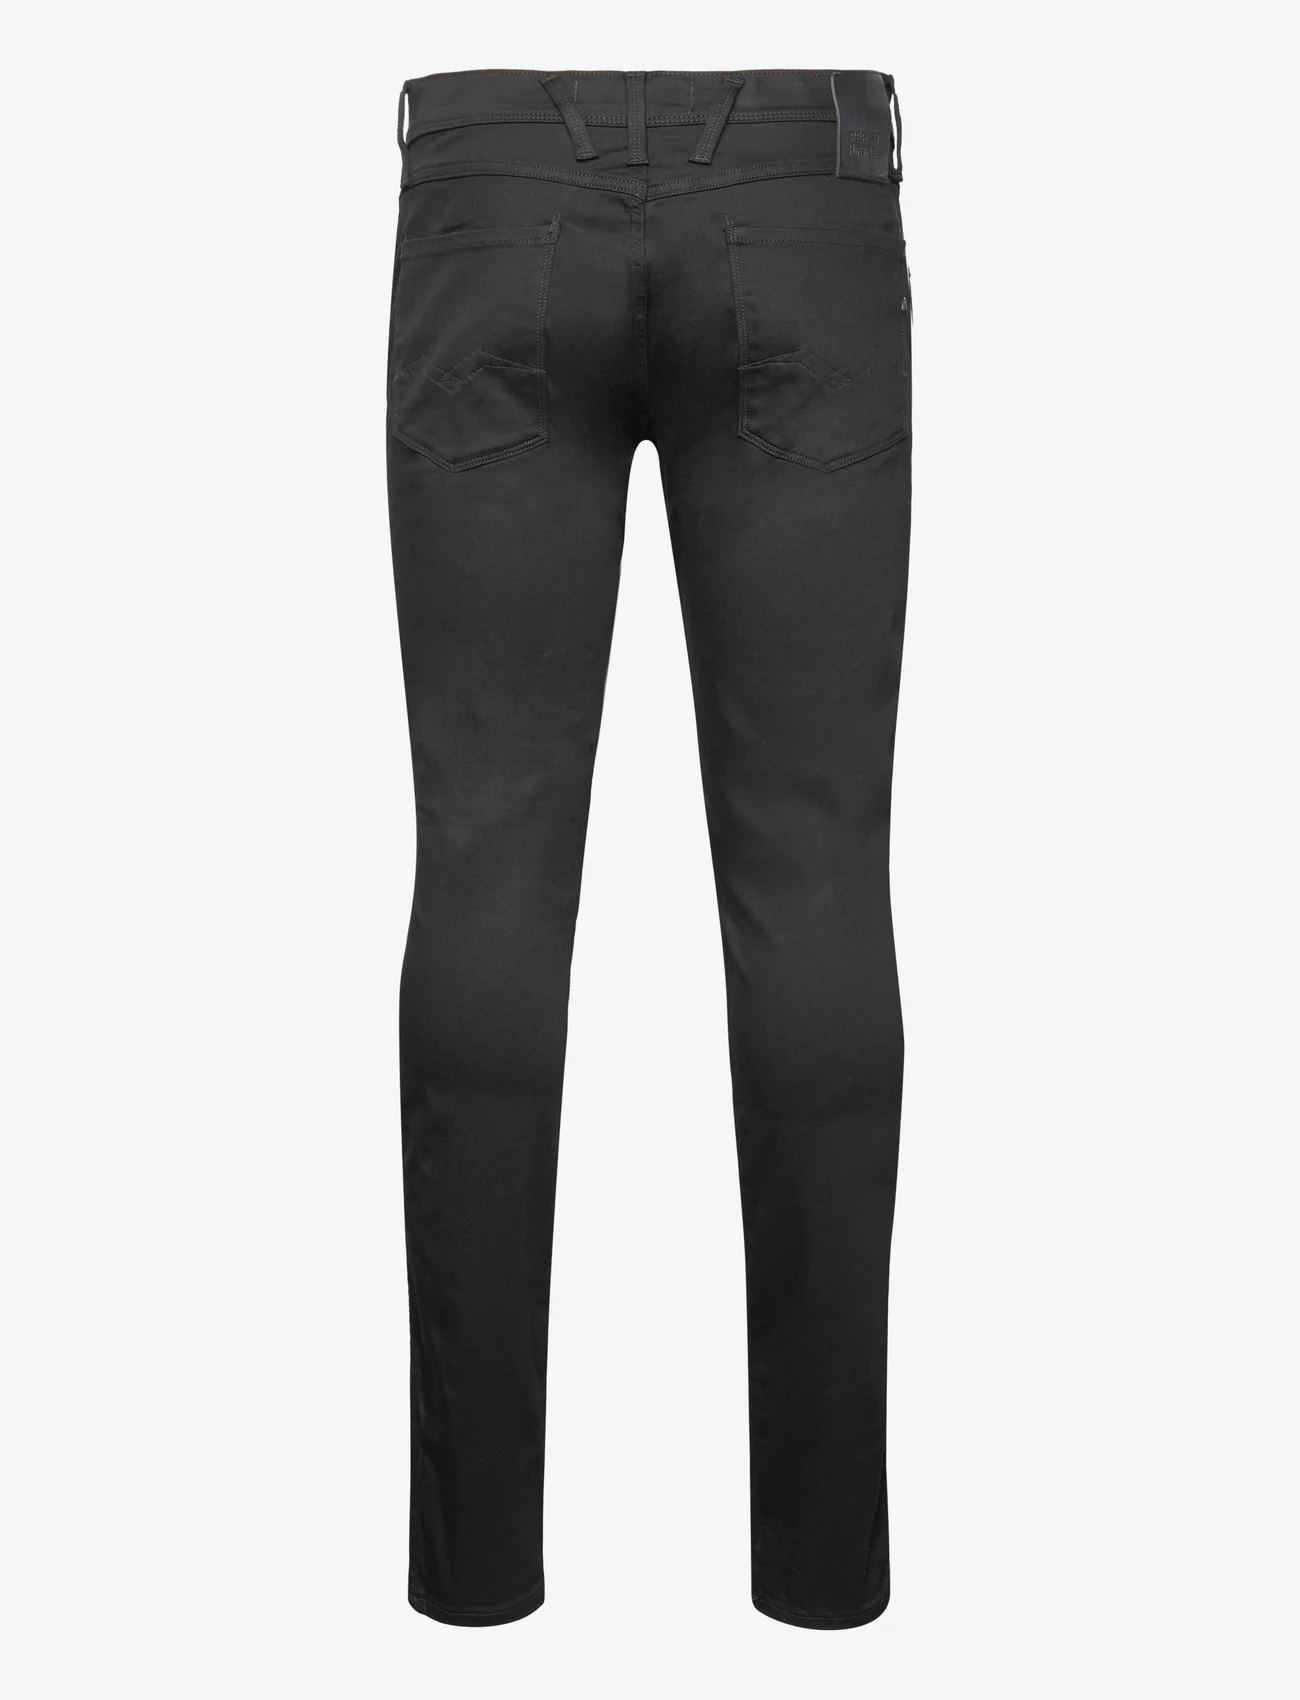 Replay - ANBASS Trousers SLIM Forever Dark - slim jeans - black - 1